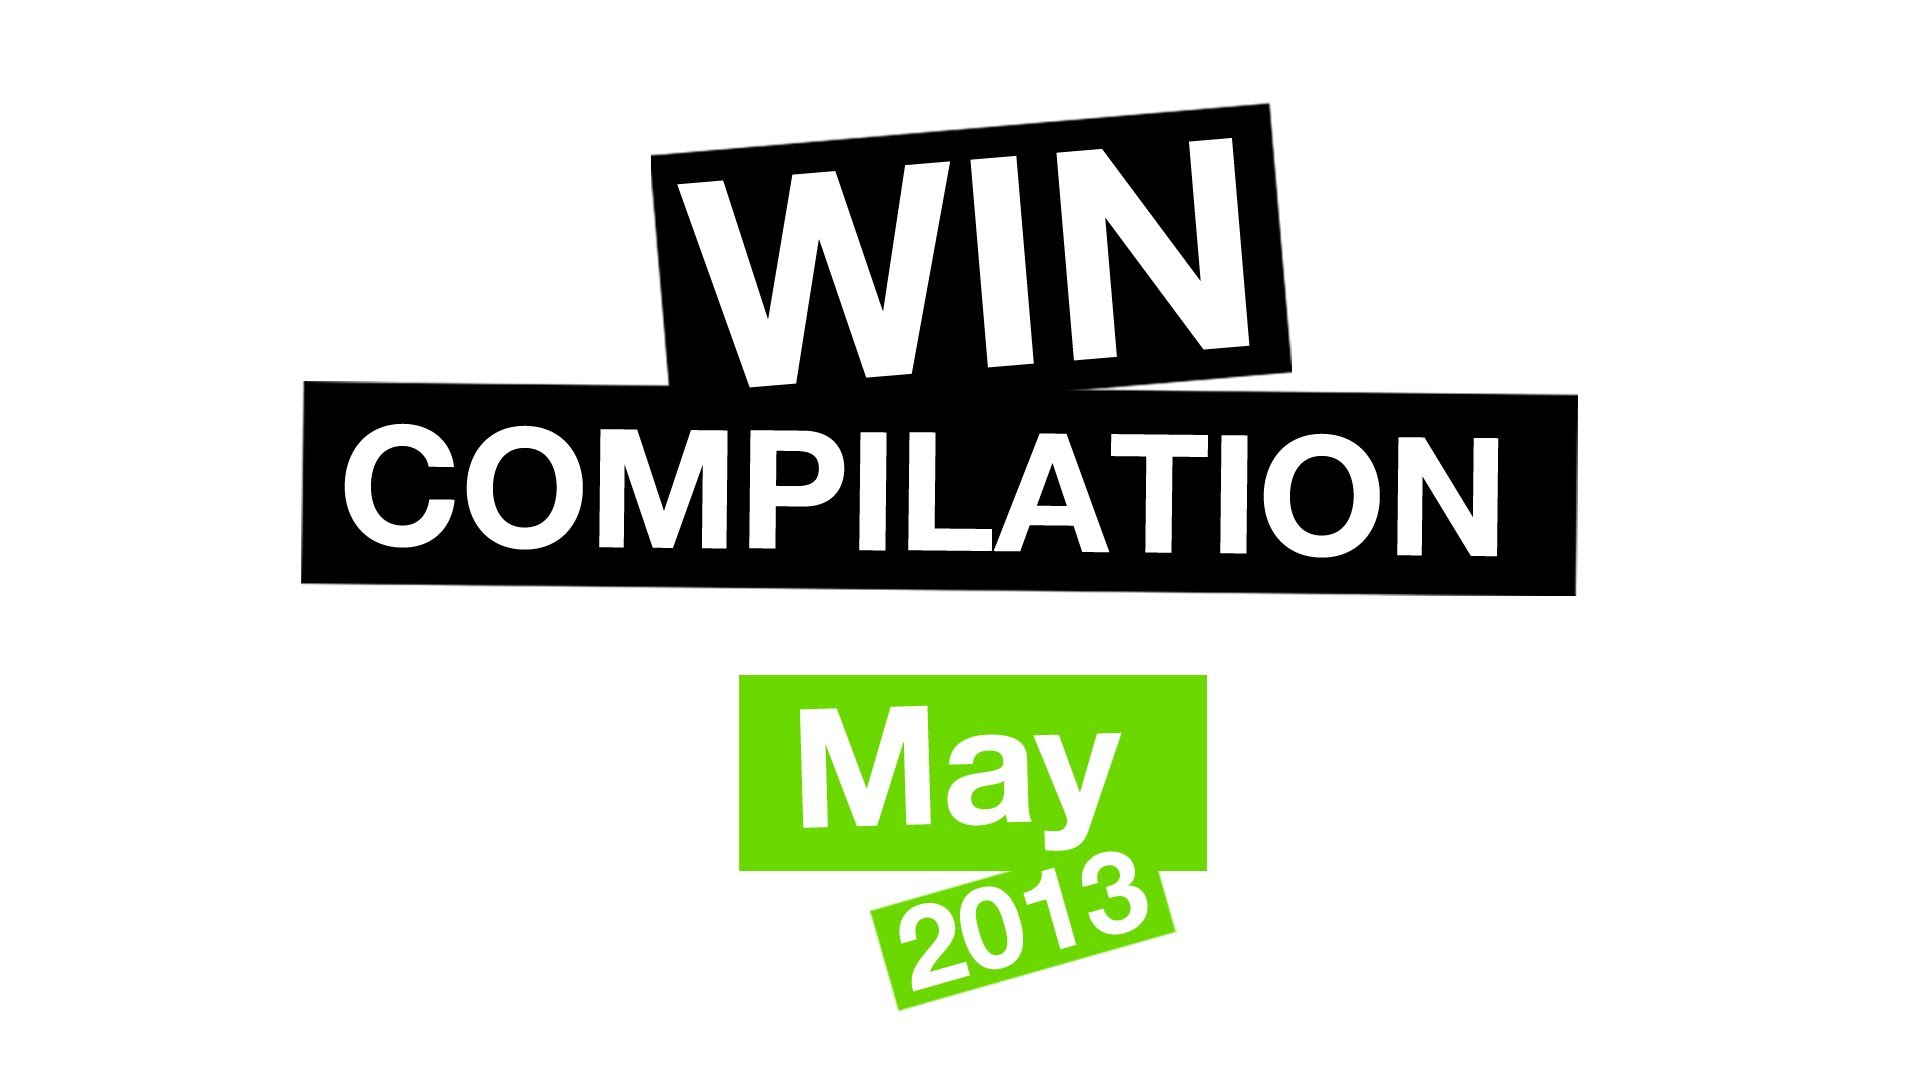 WIN Compilation May 2013 | 2013 | Was is hier eigentlich los?